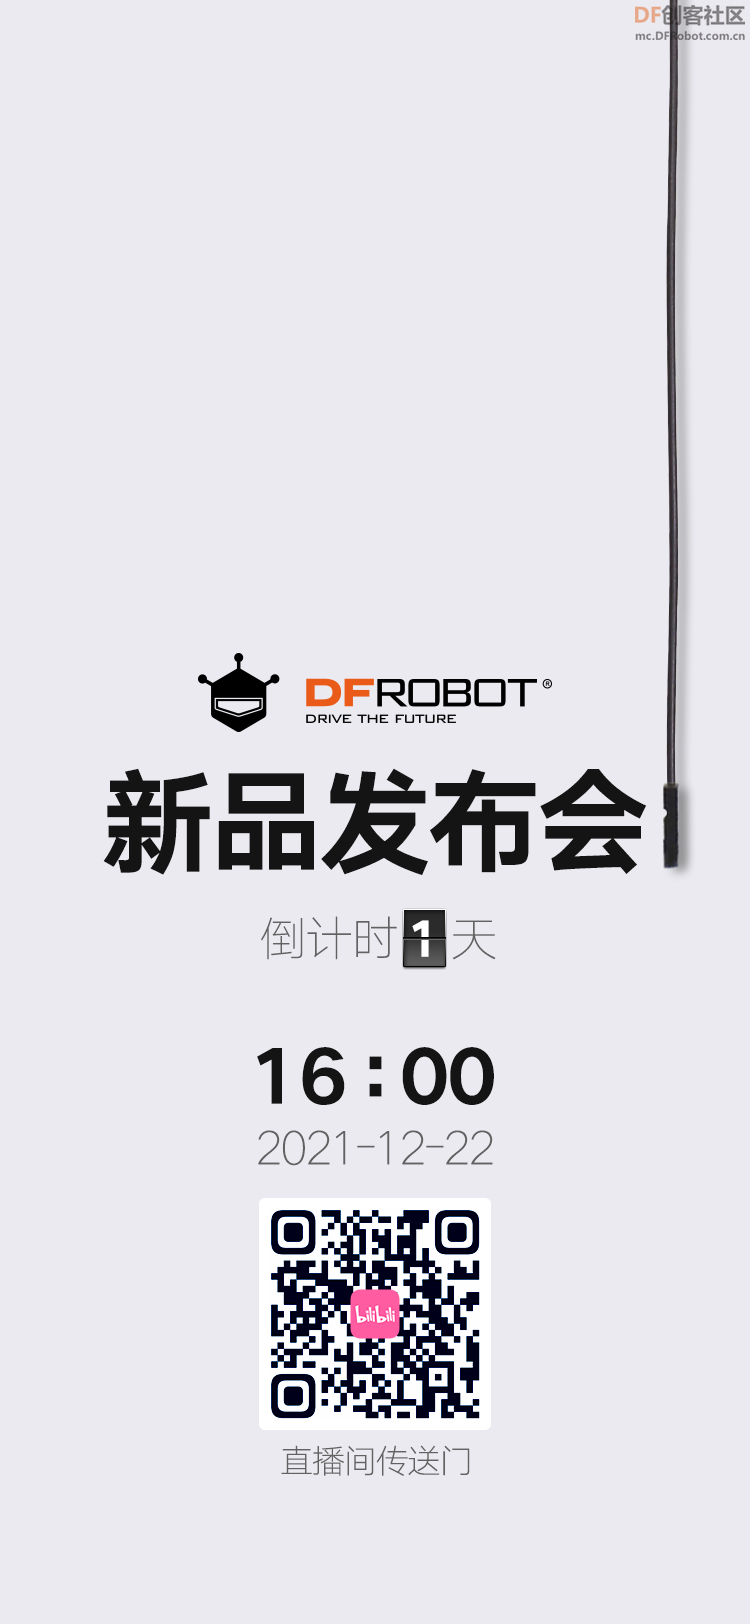 DFRobot新品发布会，倒计时1天！图1